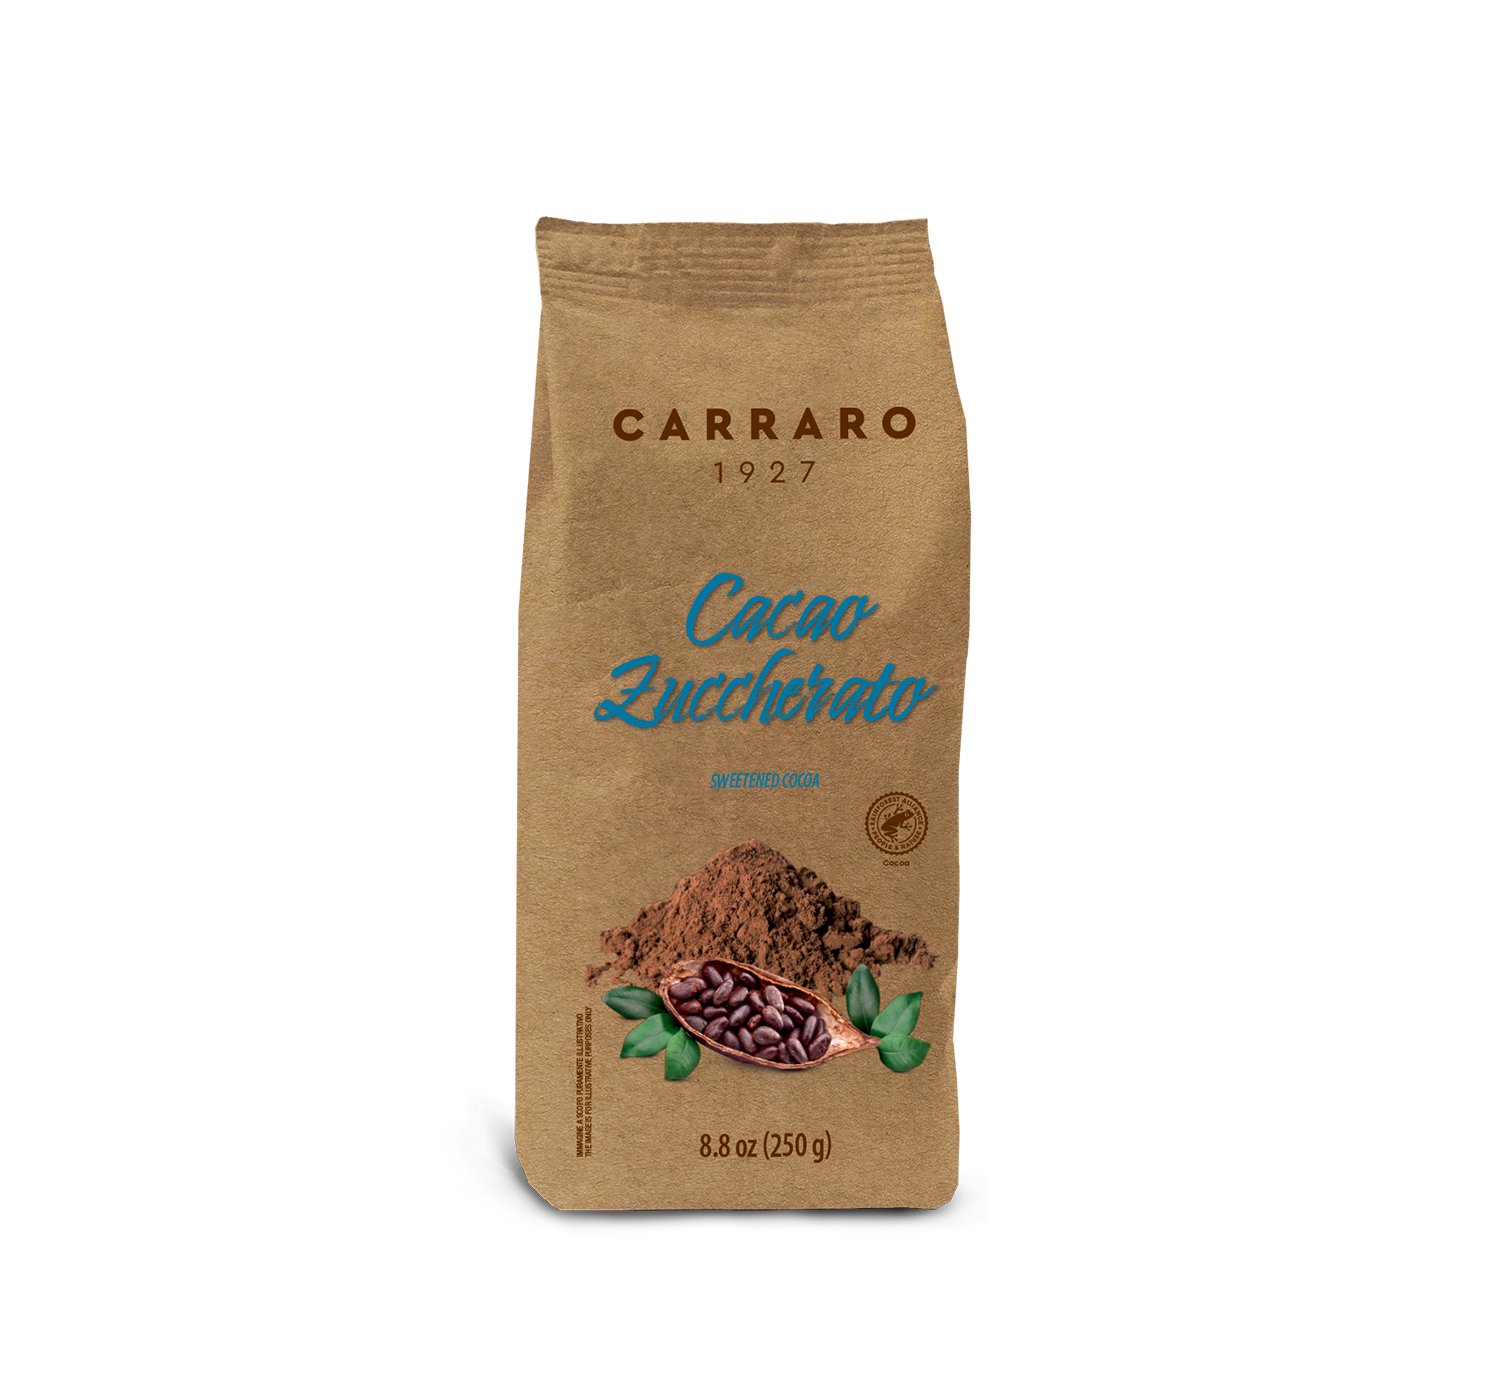 Cacao - Cacao zuccherato – 250 g - Shop online Caffè Carraro